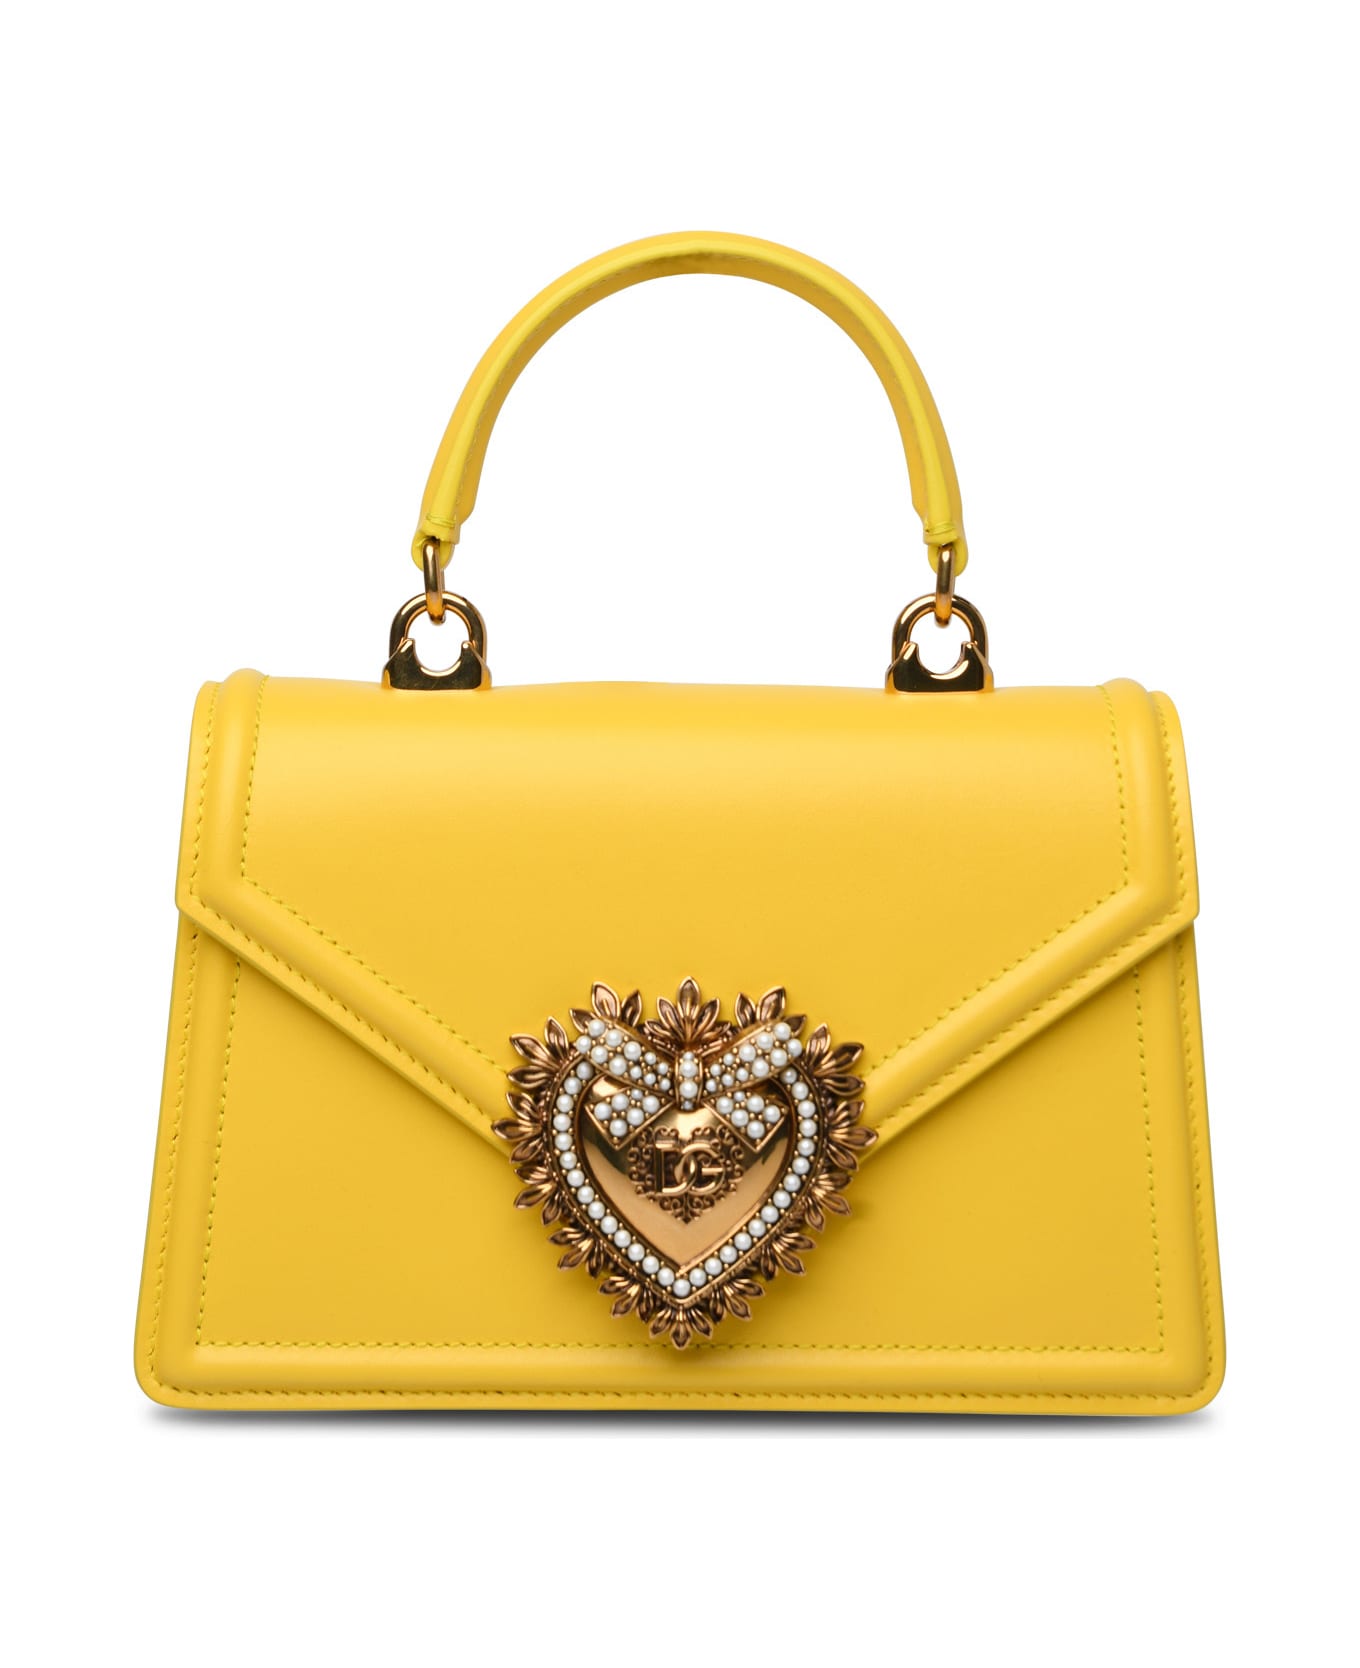 Dolce & Gabbana Devotion Bag Shoulder Bag - Yellow